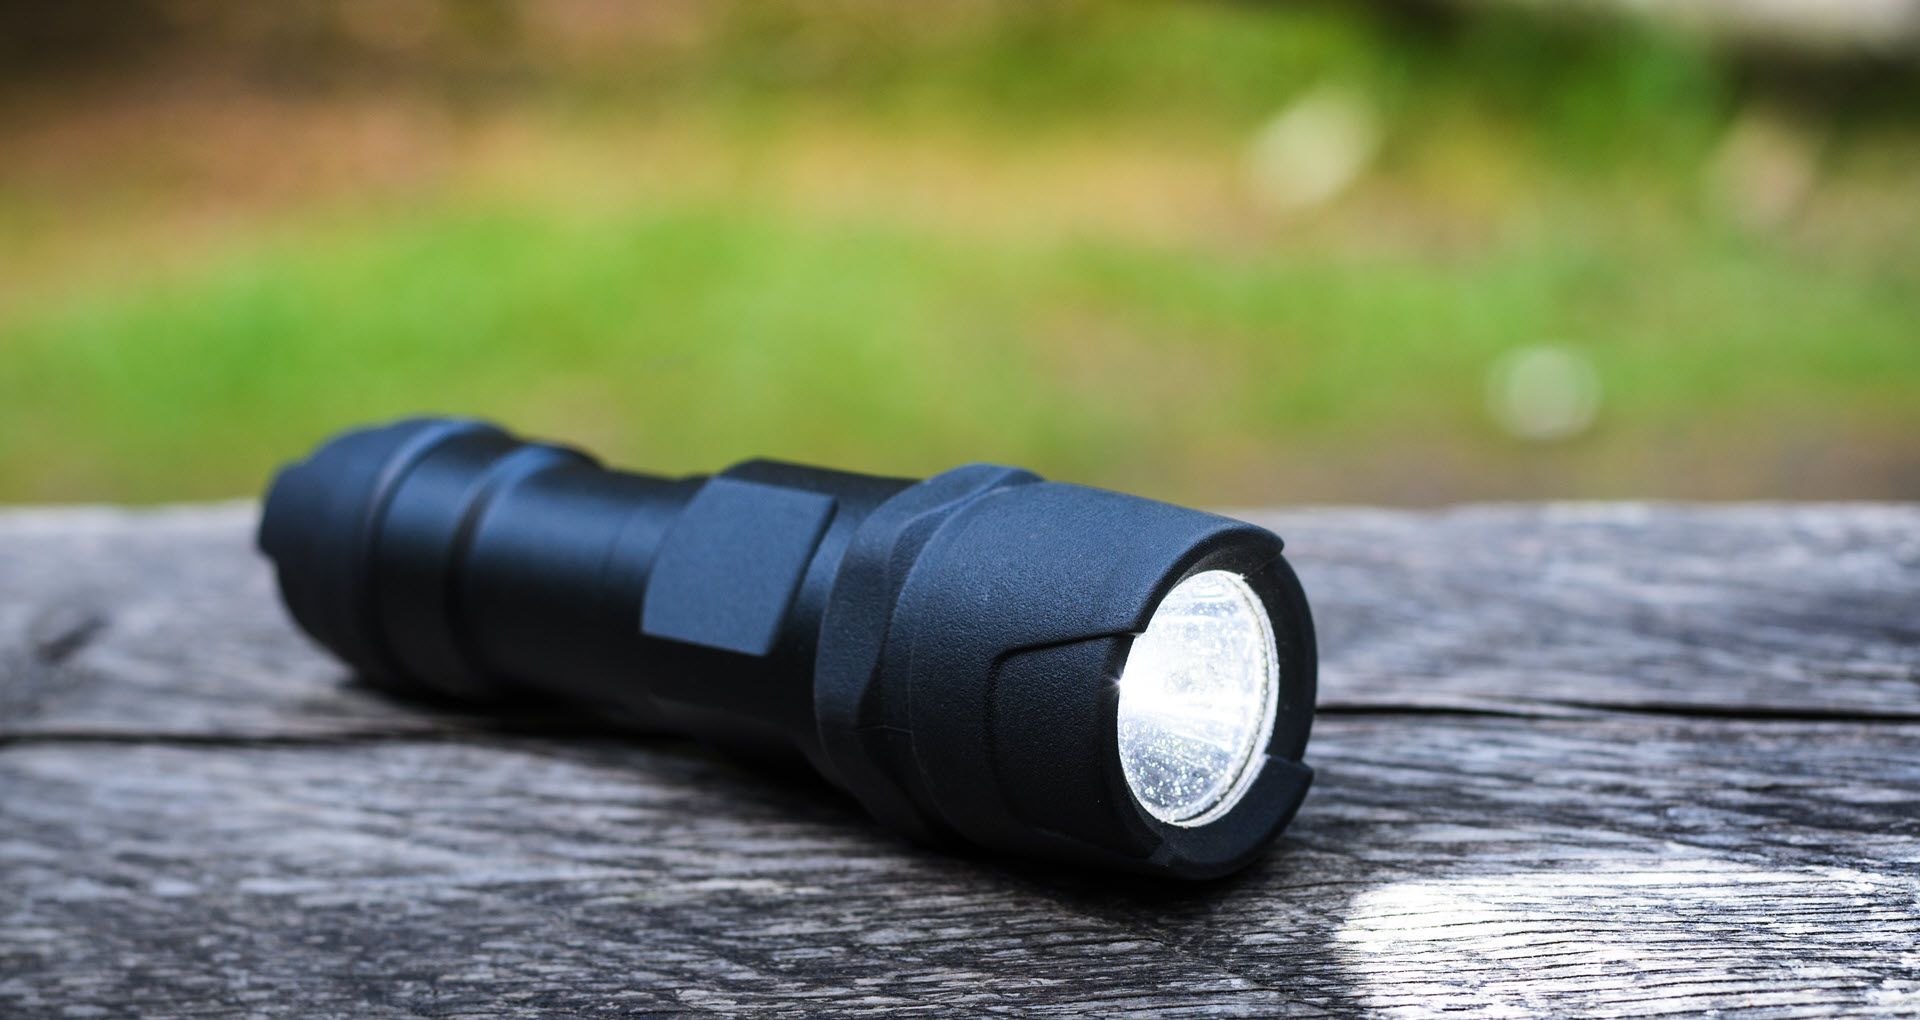 An LED flashlight on the ground